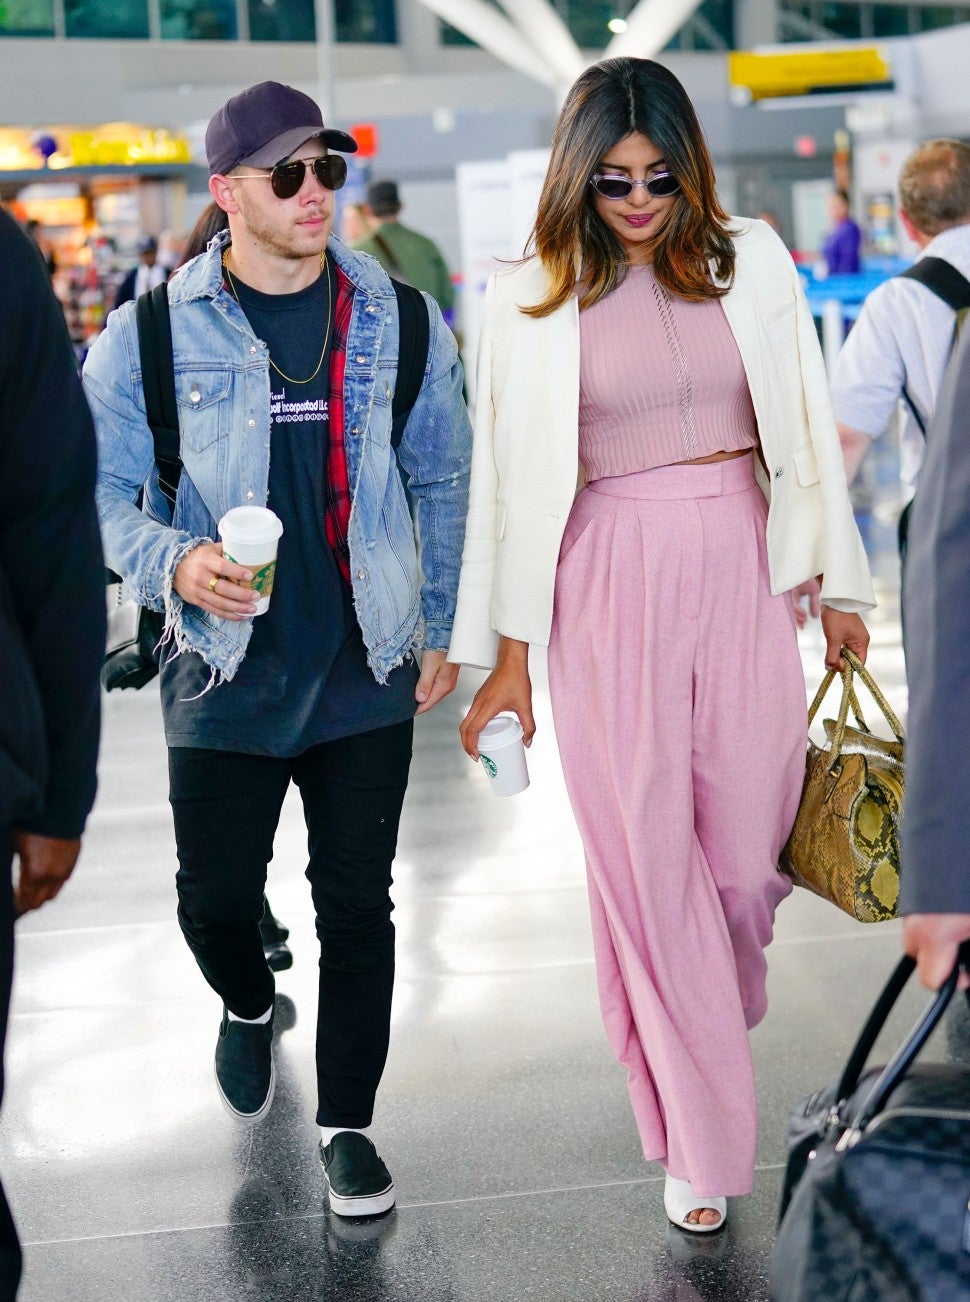 Priyanka Chopra in airport pink outfit with Nick Jonas